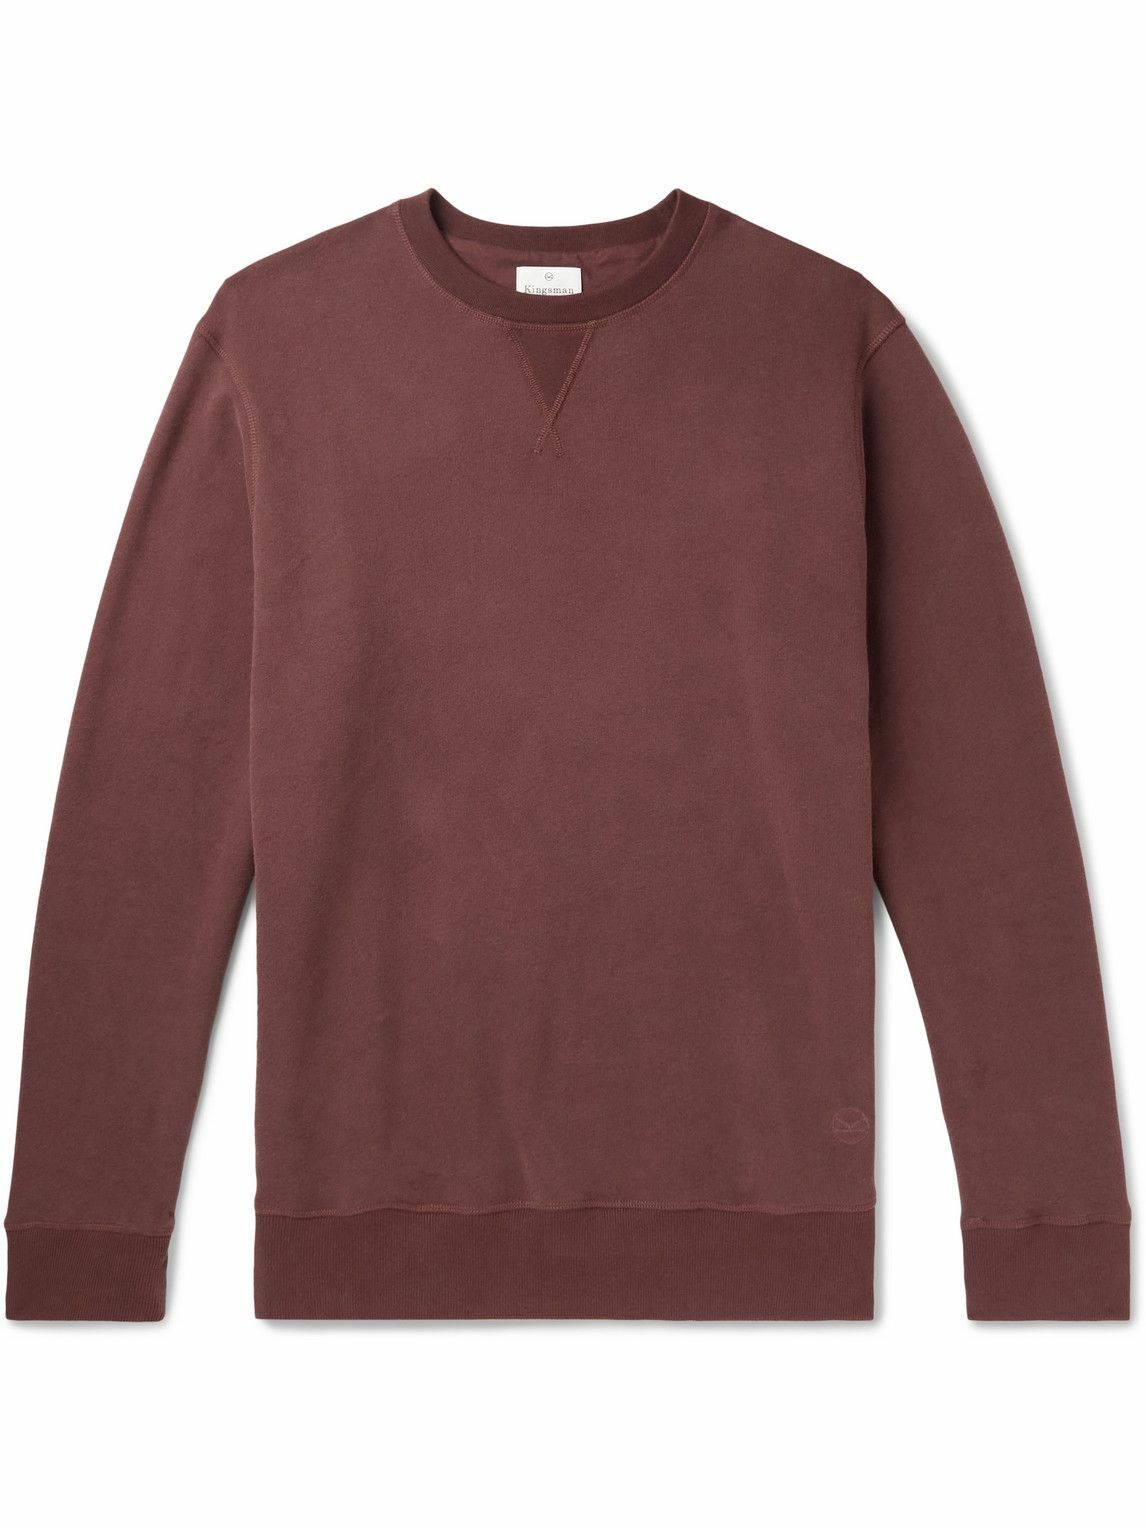 Kingsman - Cotton and Cashmere-Blend Jersey Sweatshirt - Burgundy Kingsman